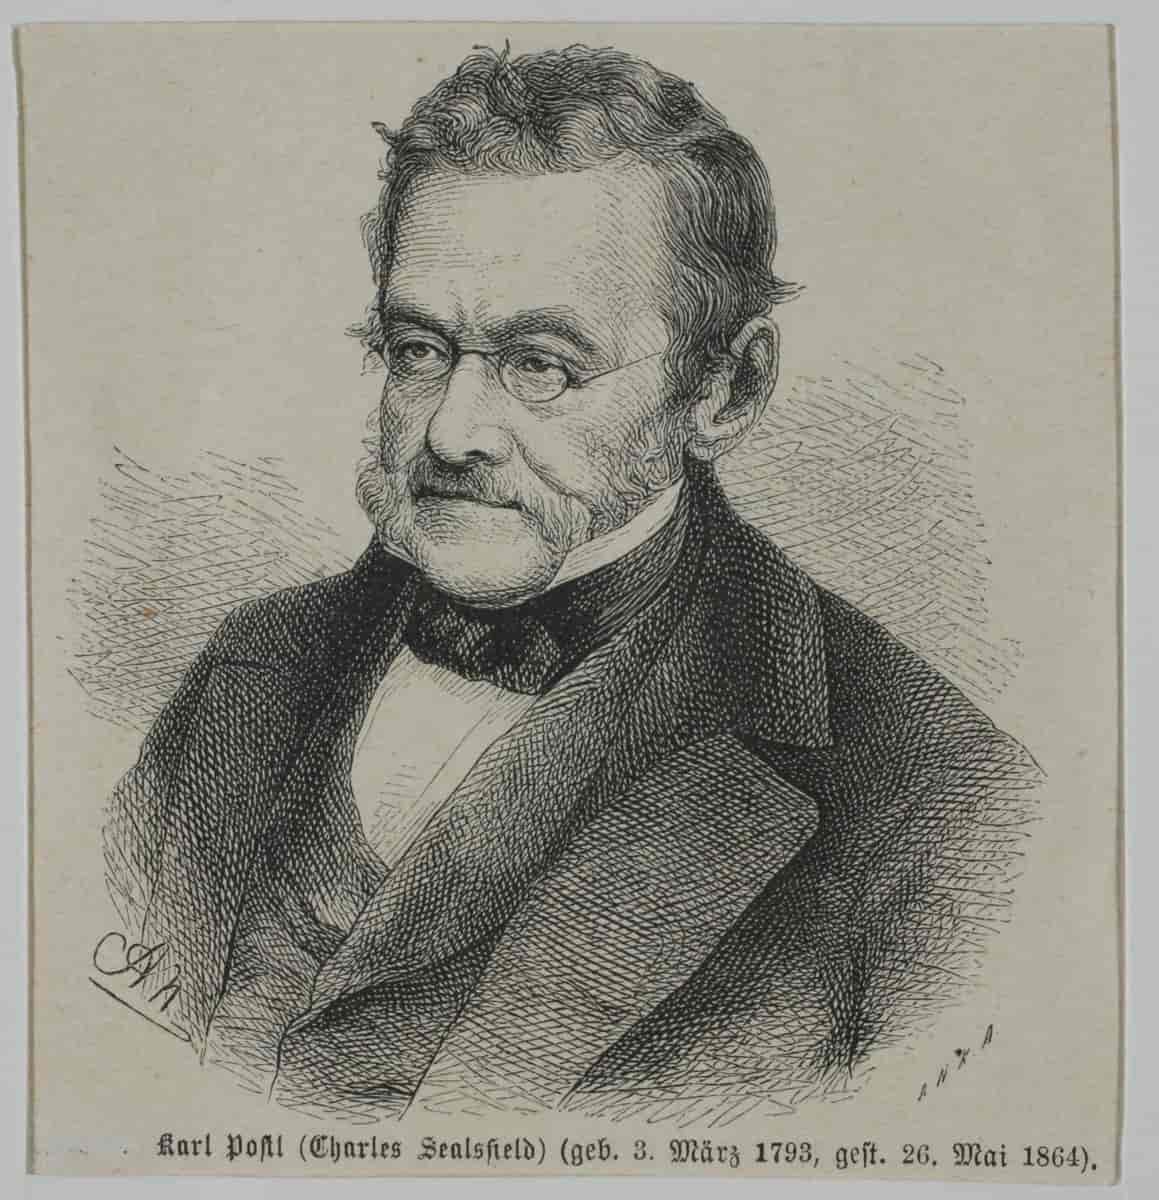 Charles Sealsfield (1864)